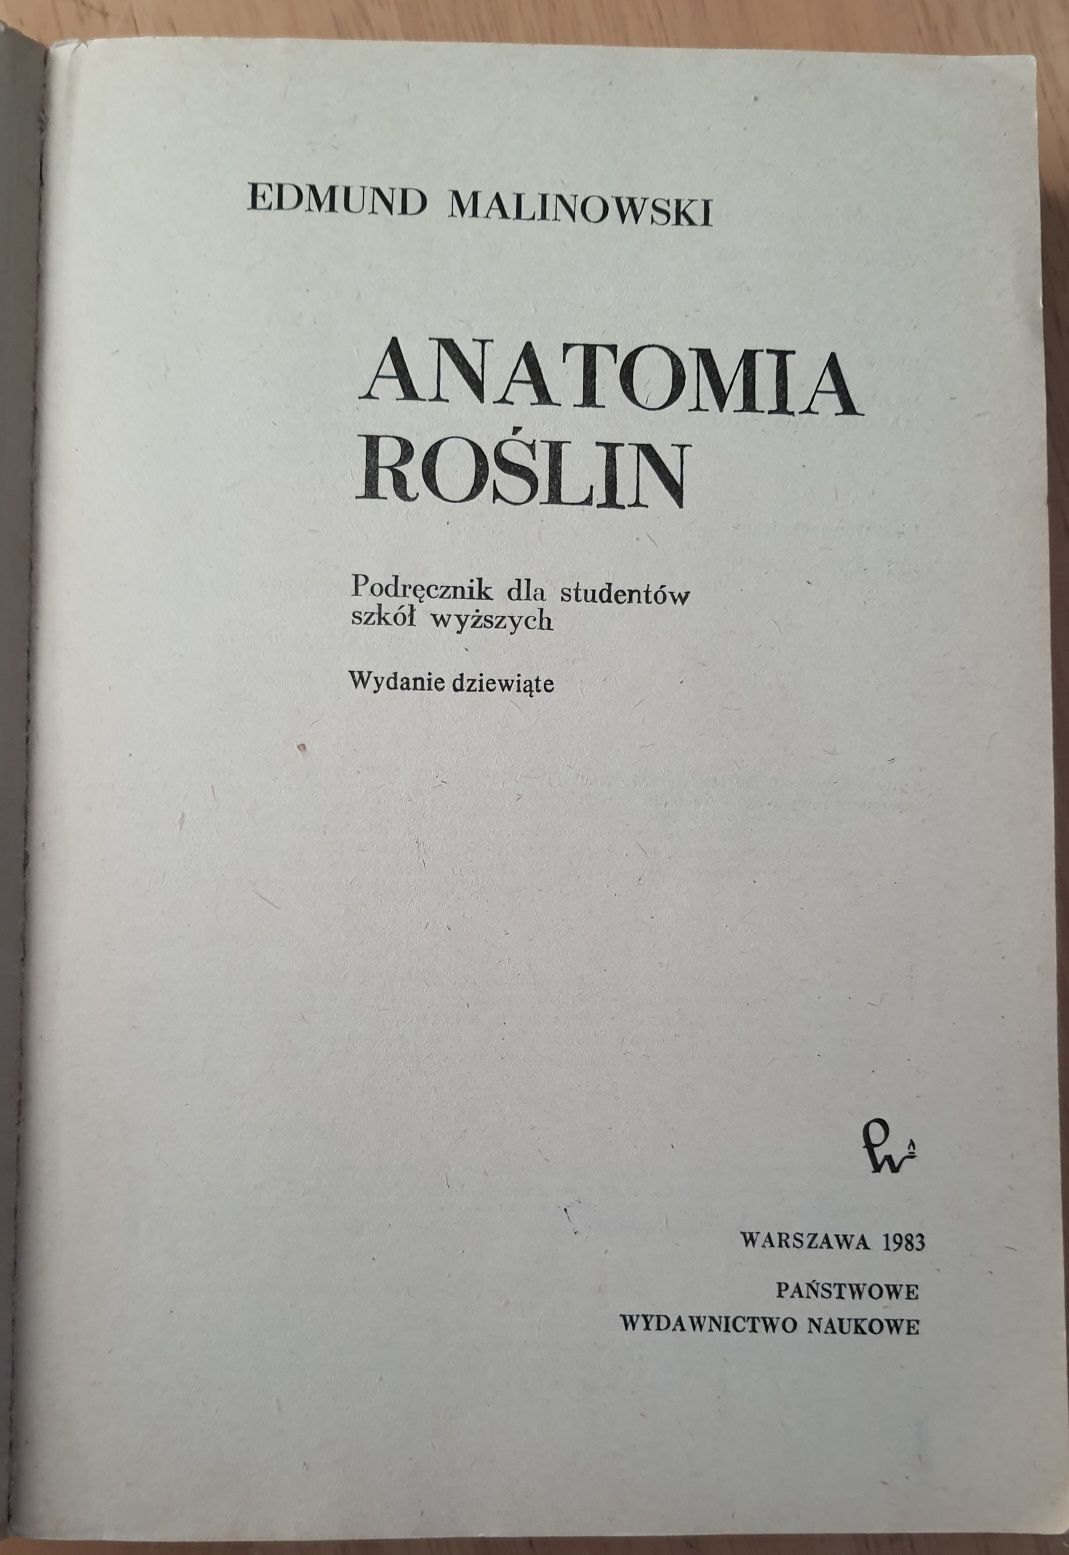 Anatomia Roślin, E. Malinowski, PWN